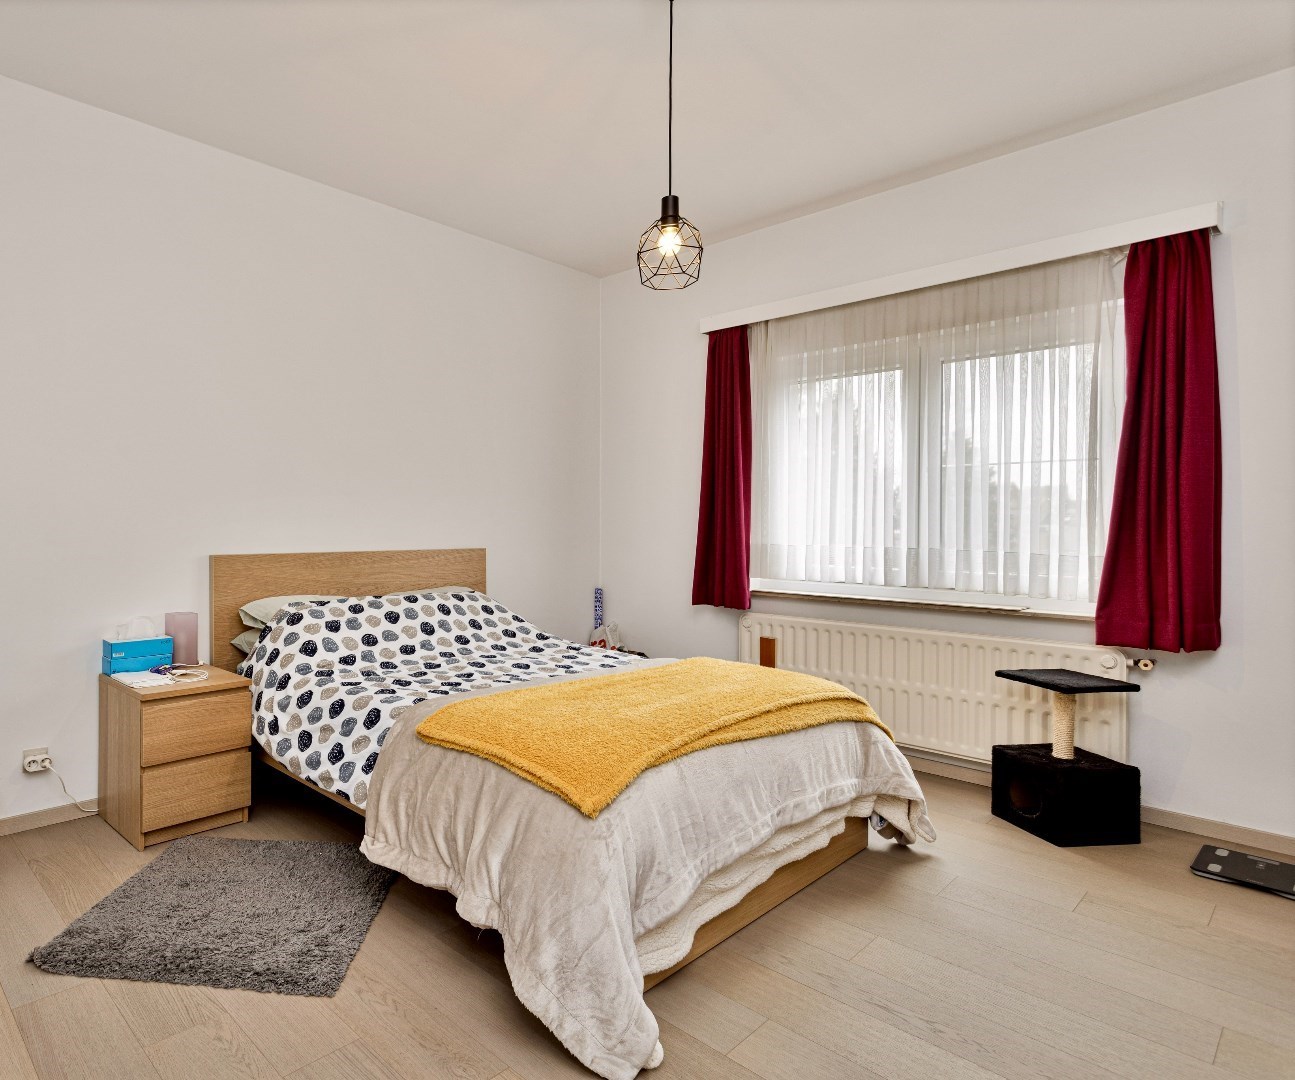 Appartement 2 slaapkamers en kelder te koop centrum Halle 